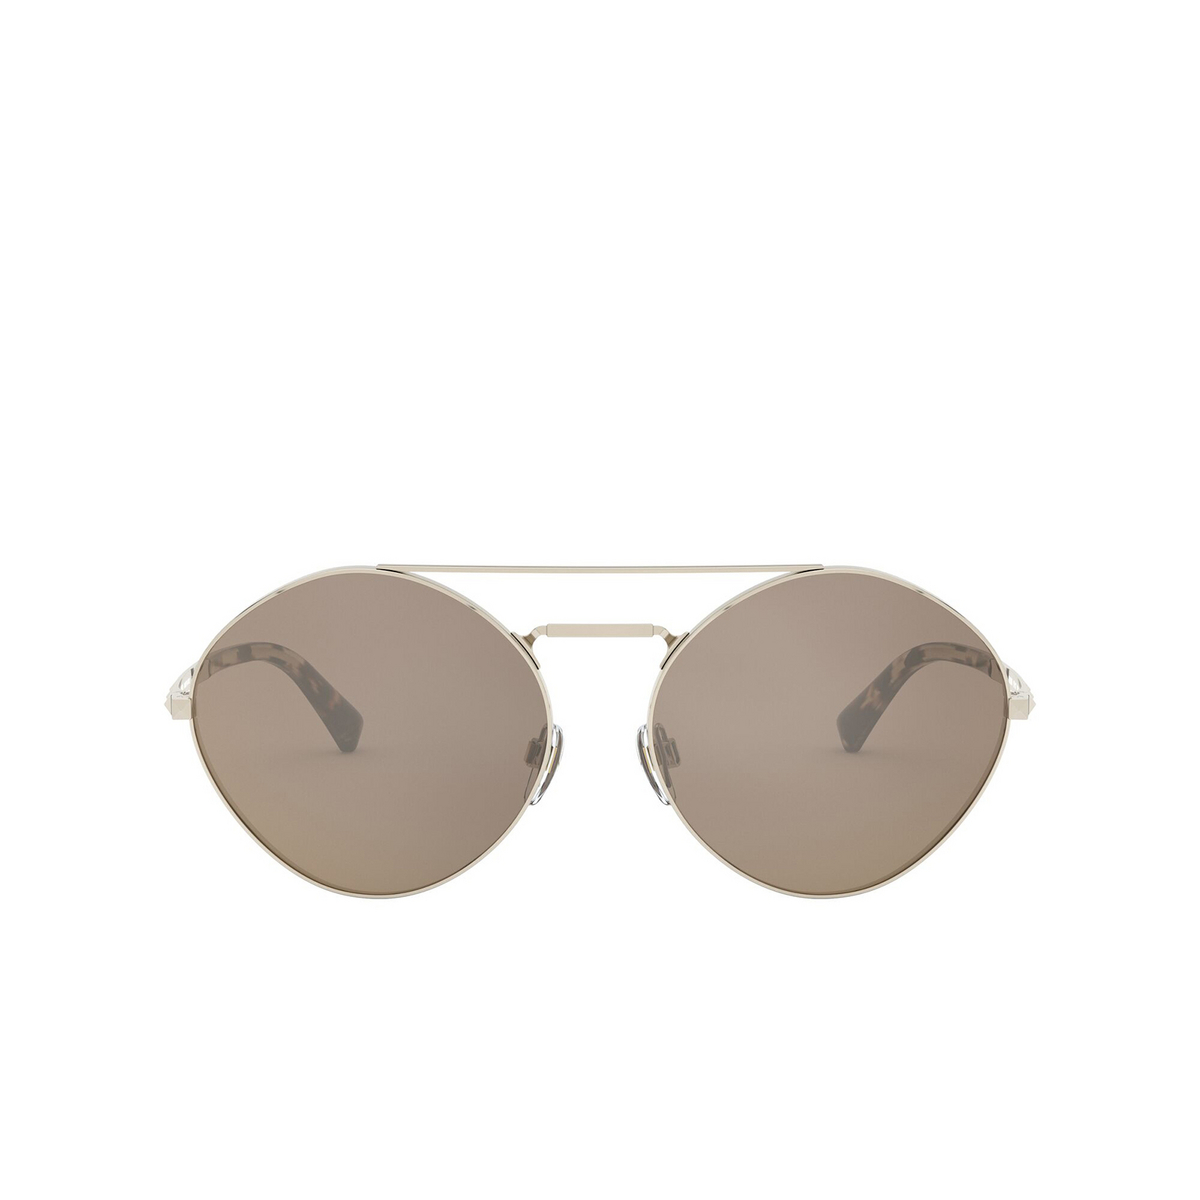 Valentino® Round Sunglasses: VA2036 color Light Gold 30035A - front view.